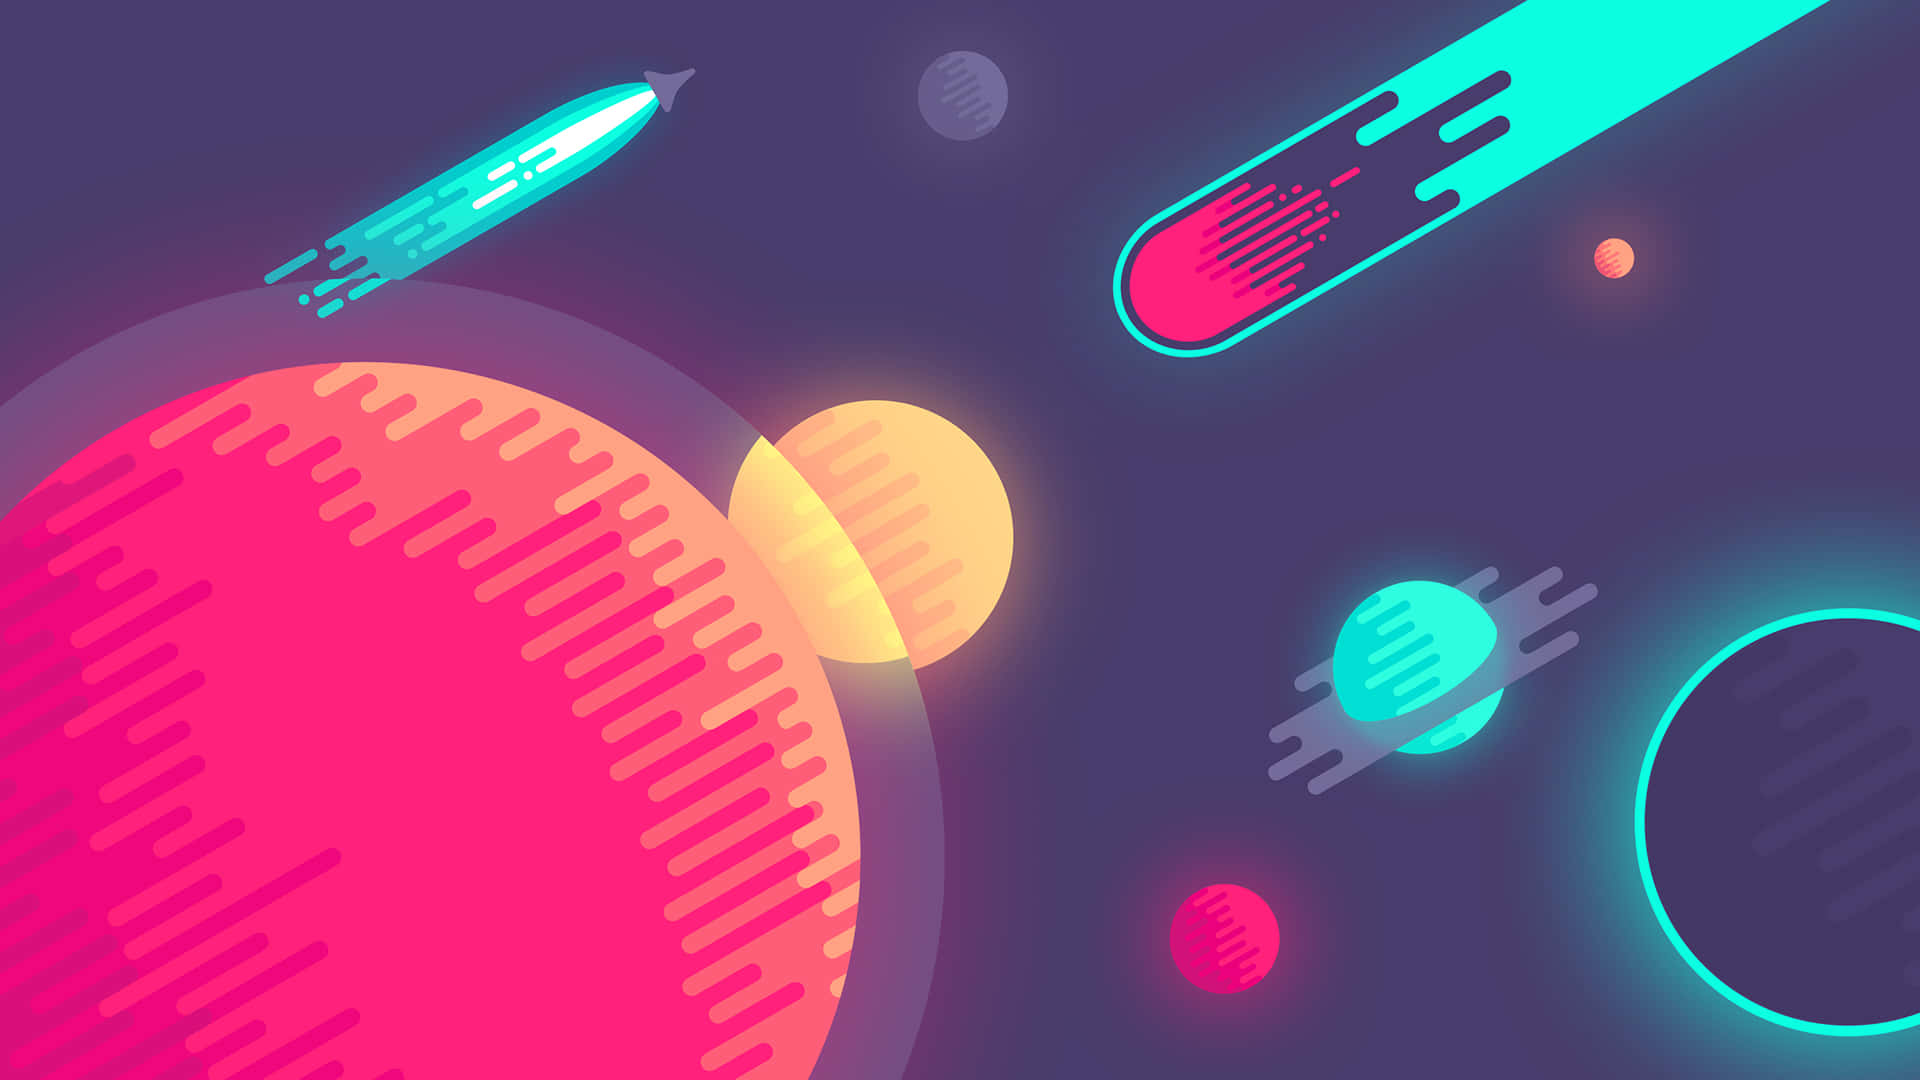 Kurzgesagt's Vibrant Illustrated Universe. Wallpaper